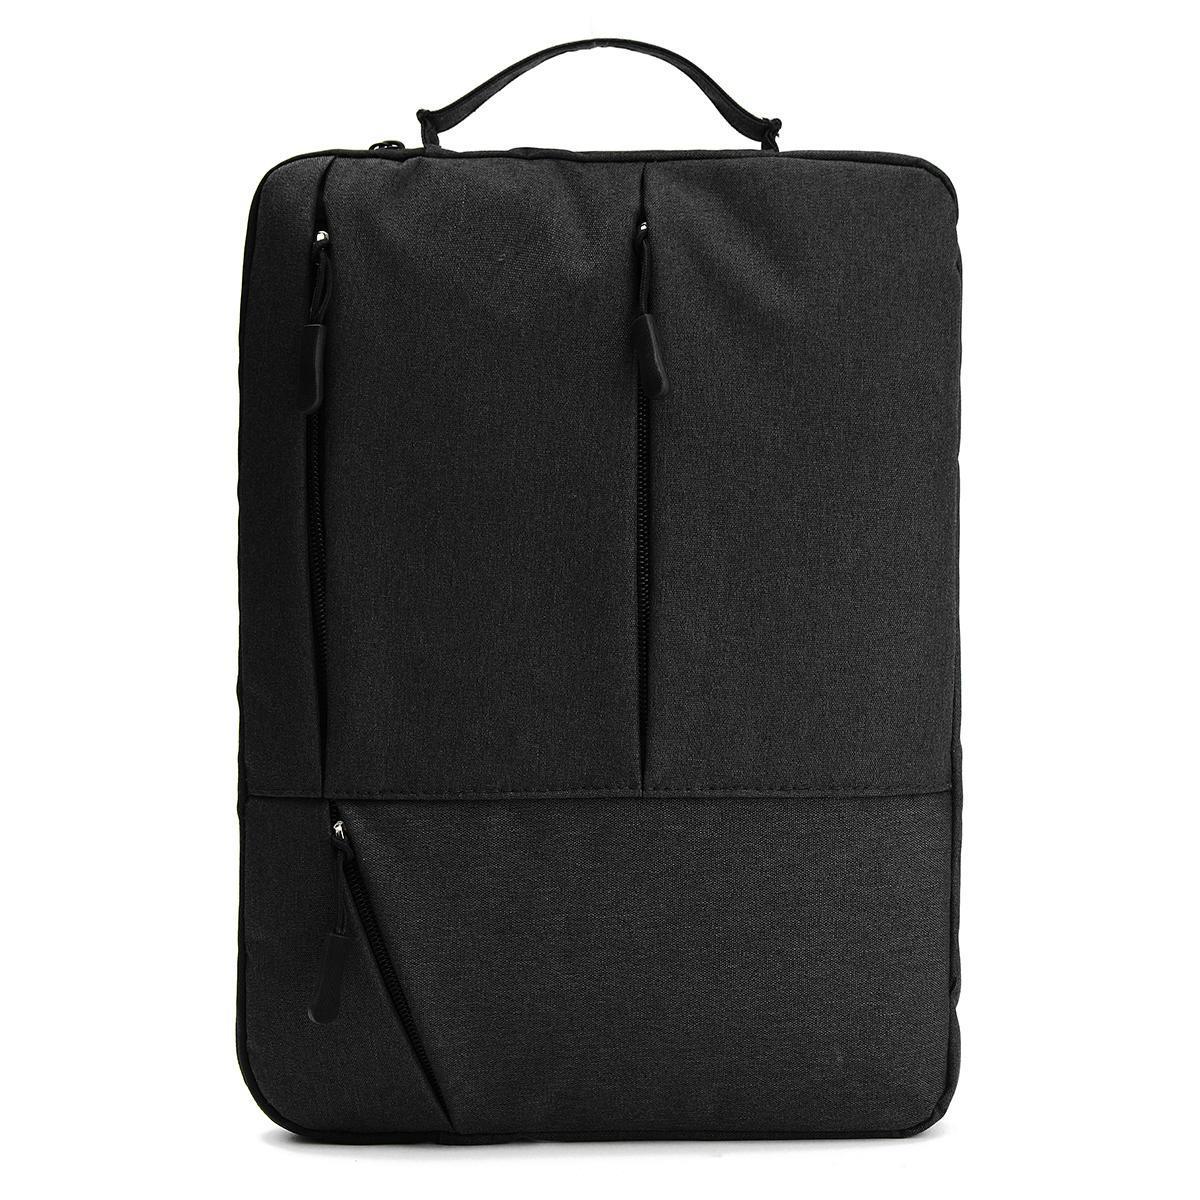 Classic Business Backpacks Capacity Students Laptop Bag Men Women Bags For 13 inch Tablet Laptop BLACK